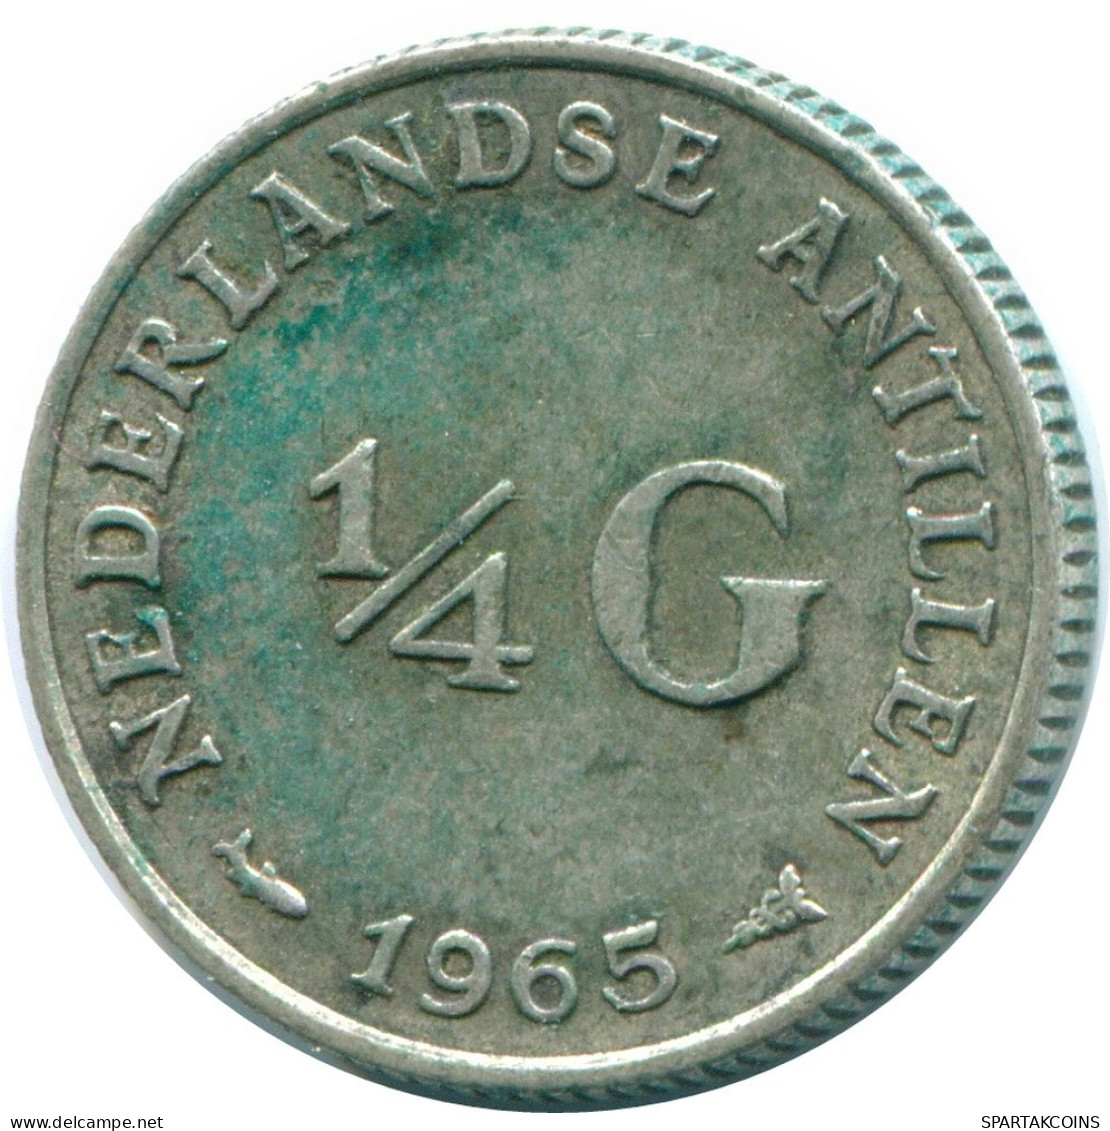 1/4 GULDEN 1965 NIEDERLÄNDISCHE ANTILLEN SILBER Koloniale Münze #NL11348.4.D.A - Netherlands Antilles